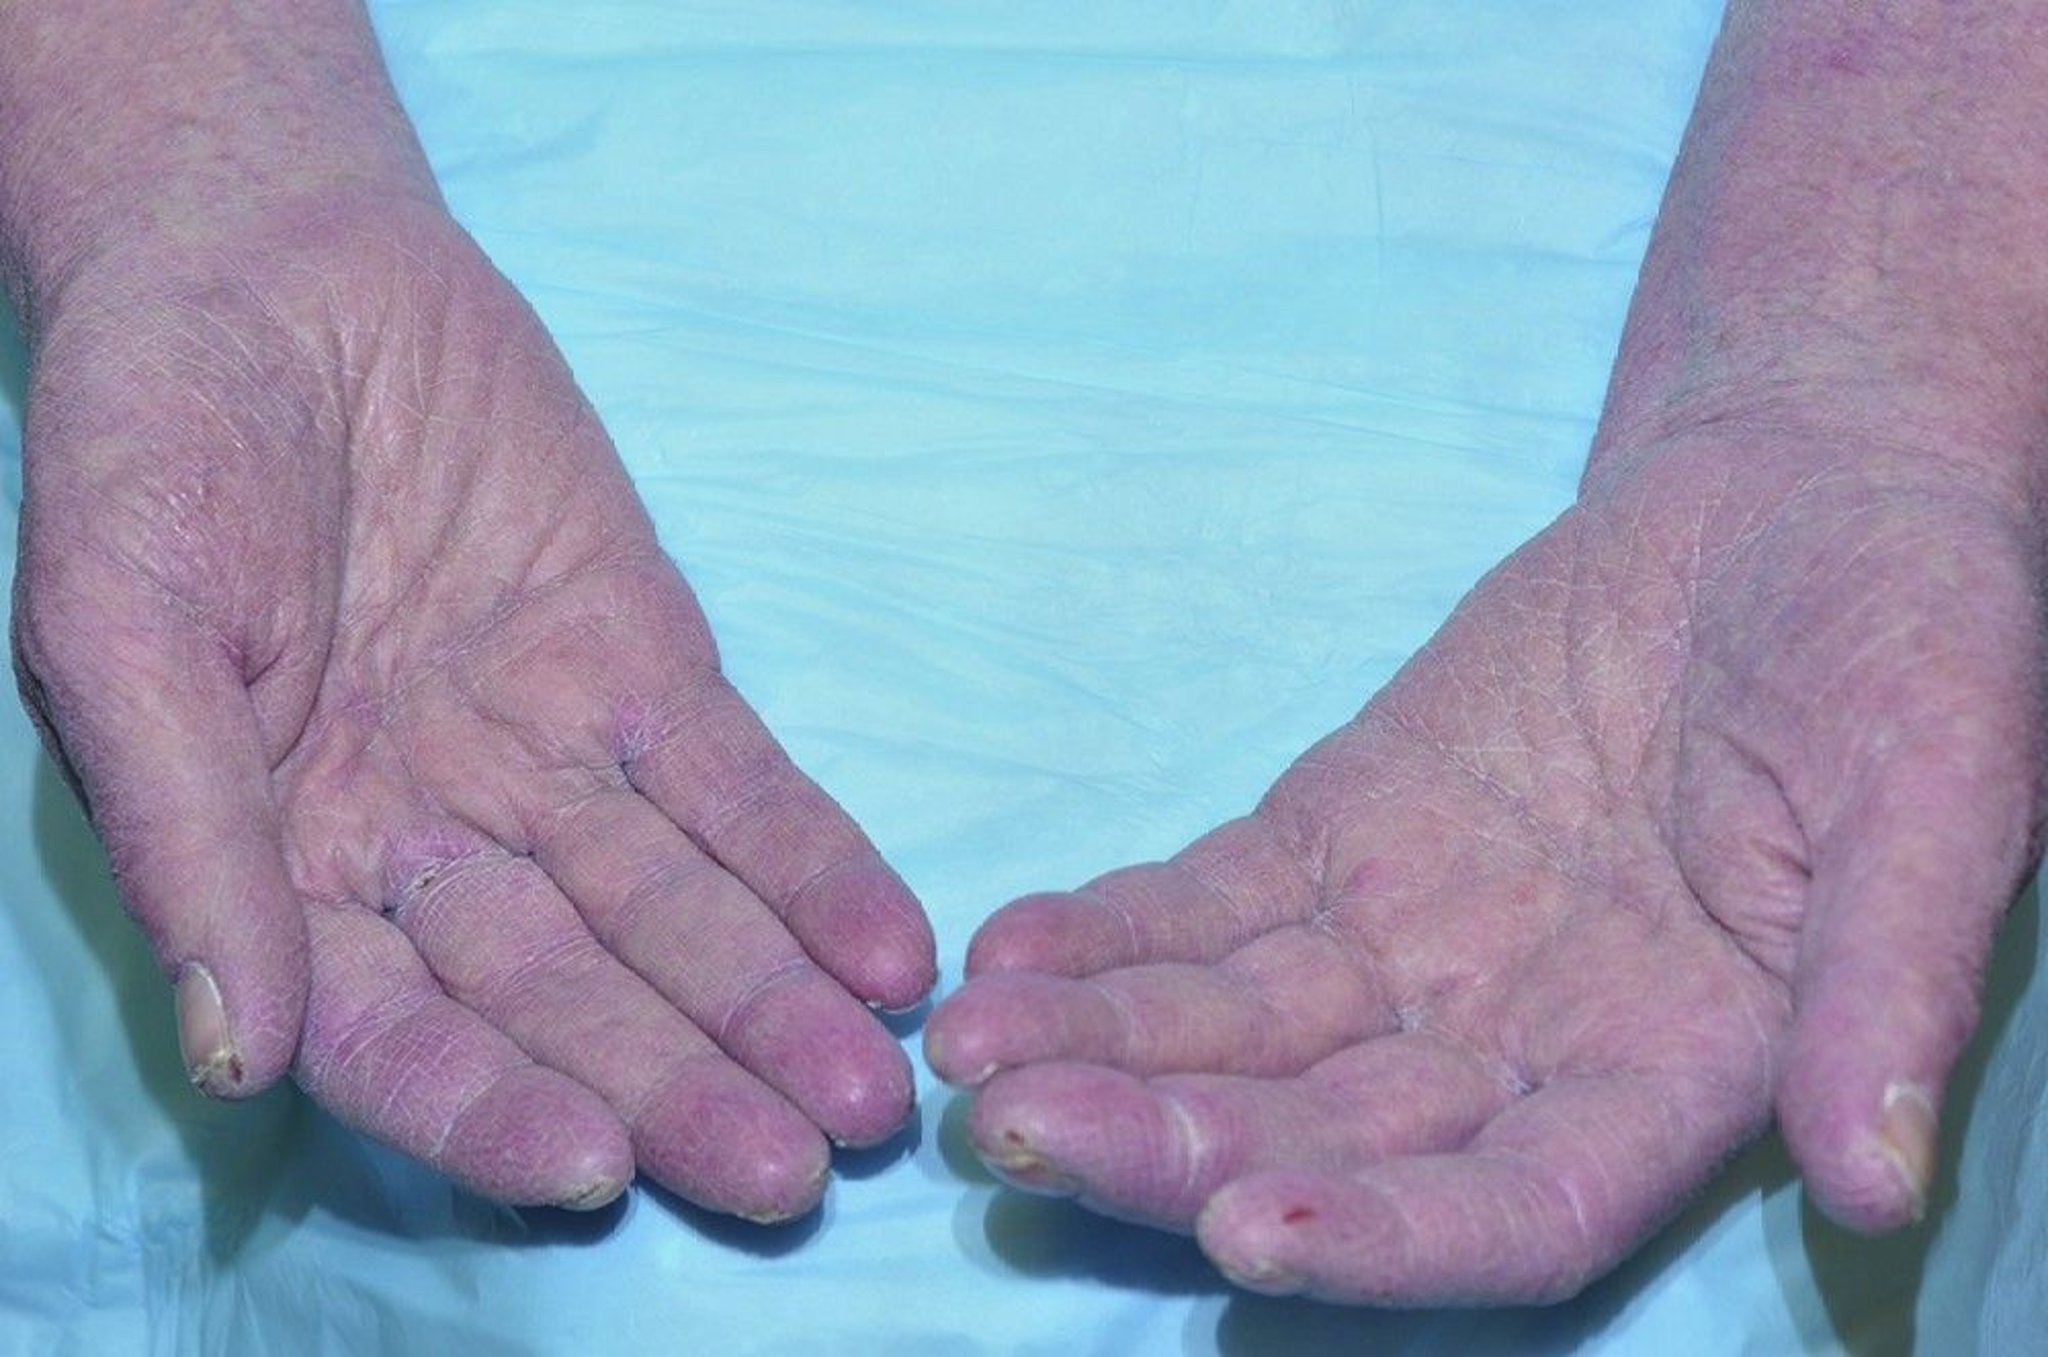 Xeroderma (Xerosis) of the Hands